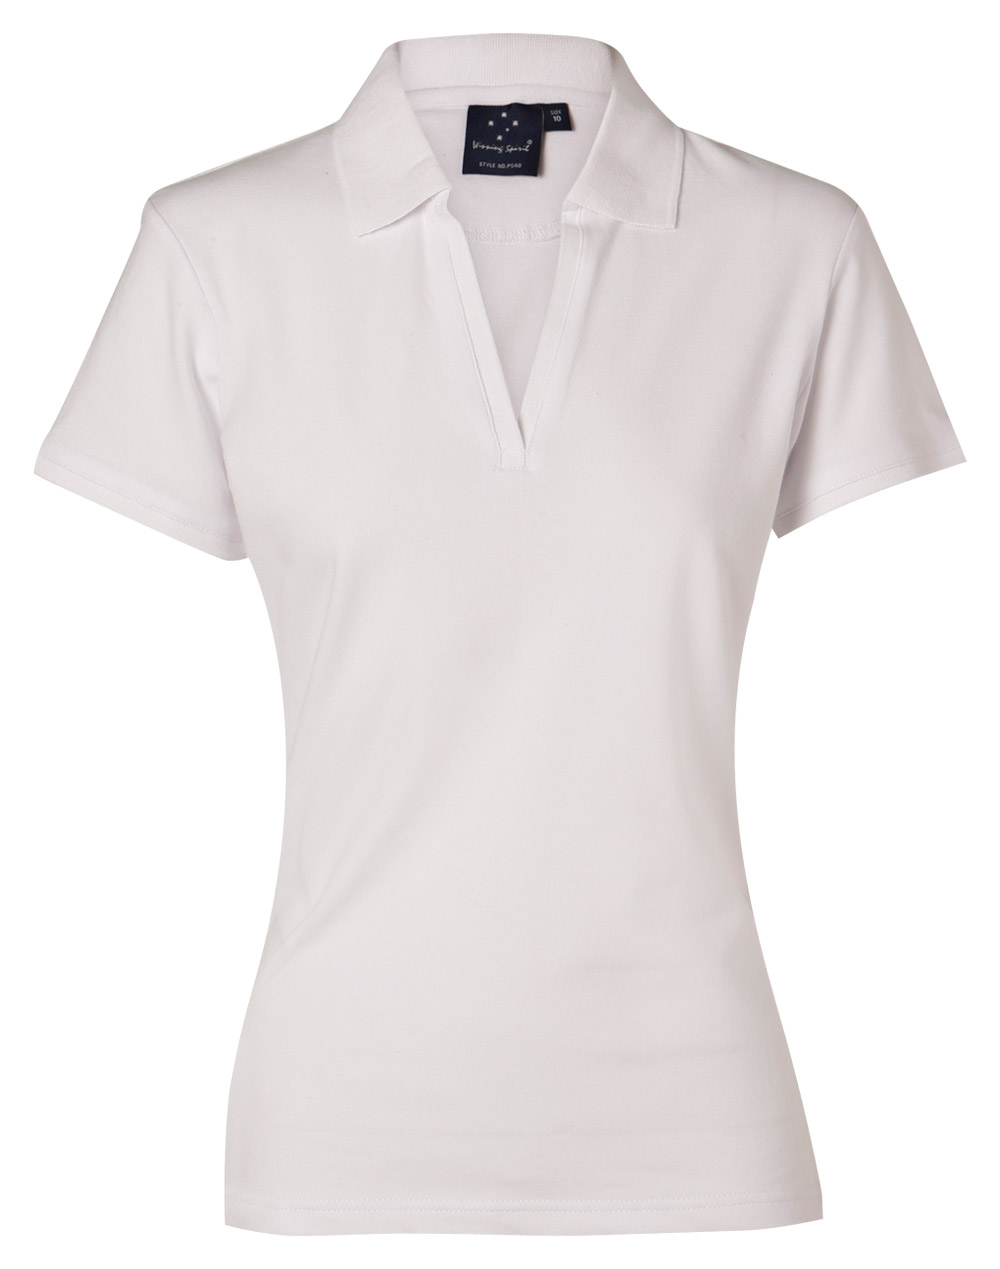 Custom (White) Long Beach Ledies Polo Shirts Online Perth Australia